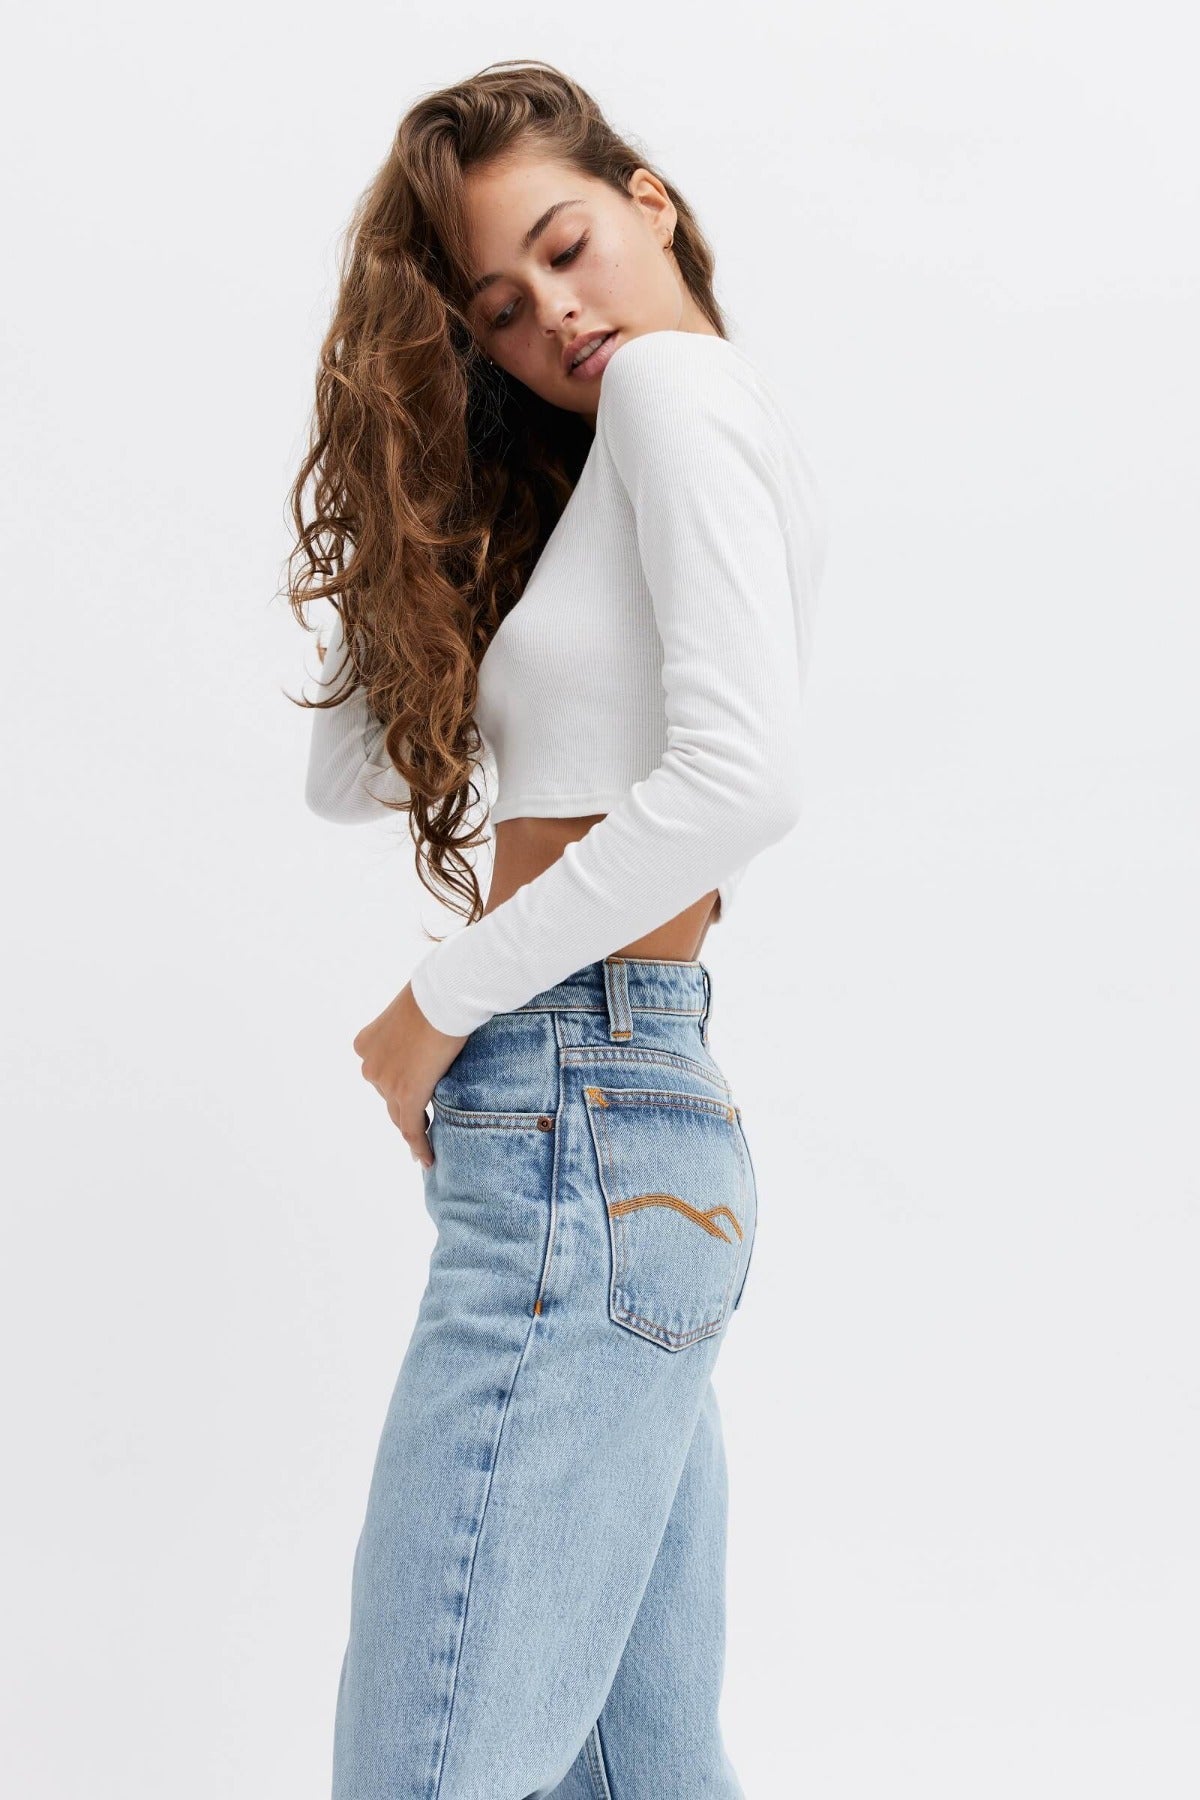 Organic denim female jeans. Comfy style